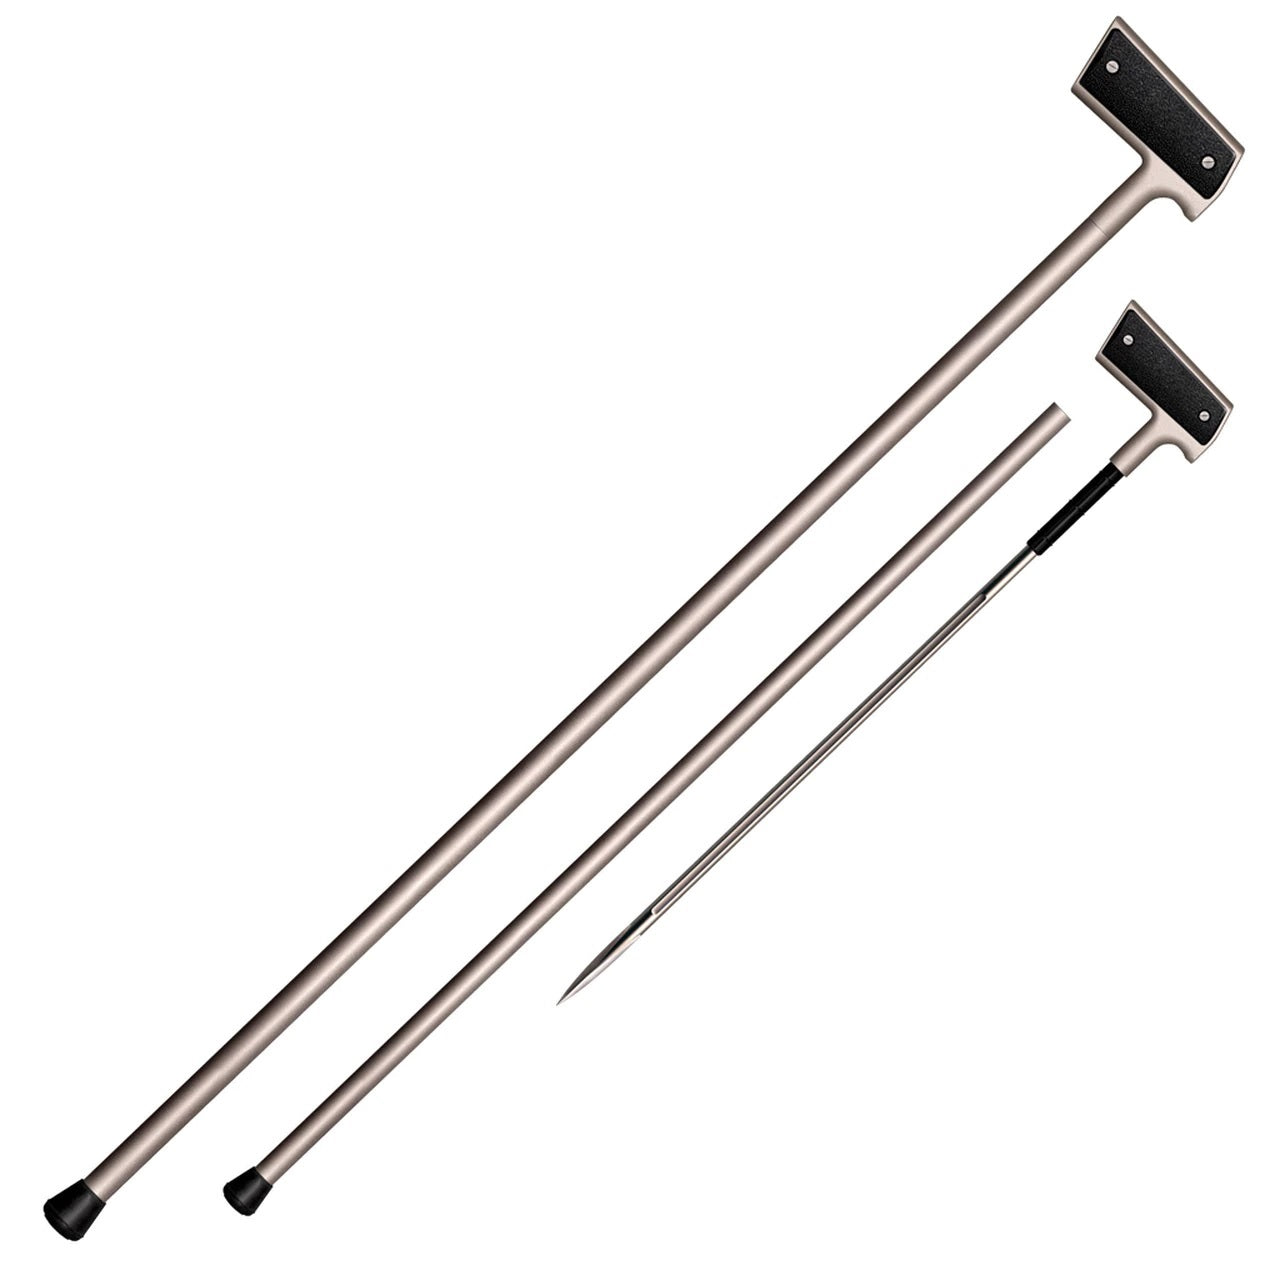 Sword cane 1911 - Cold Steel